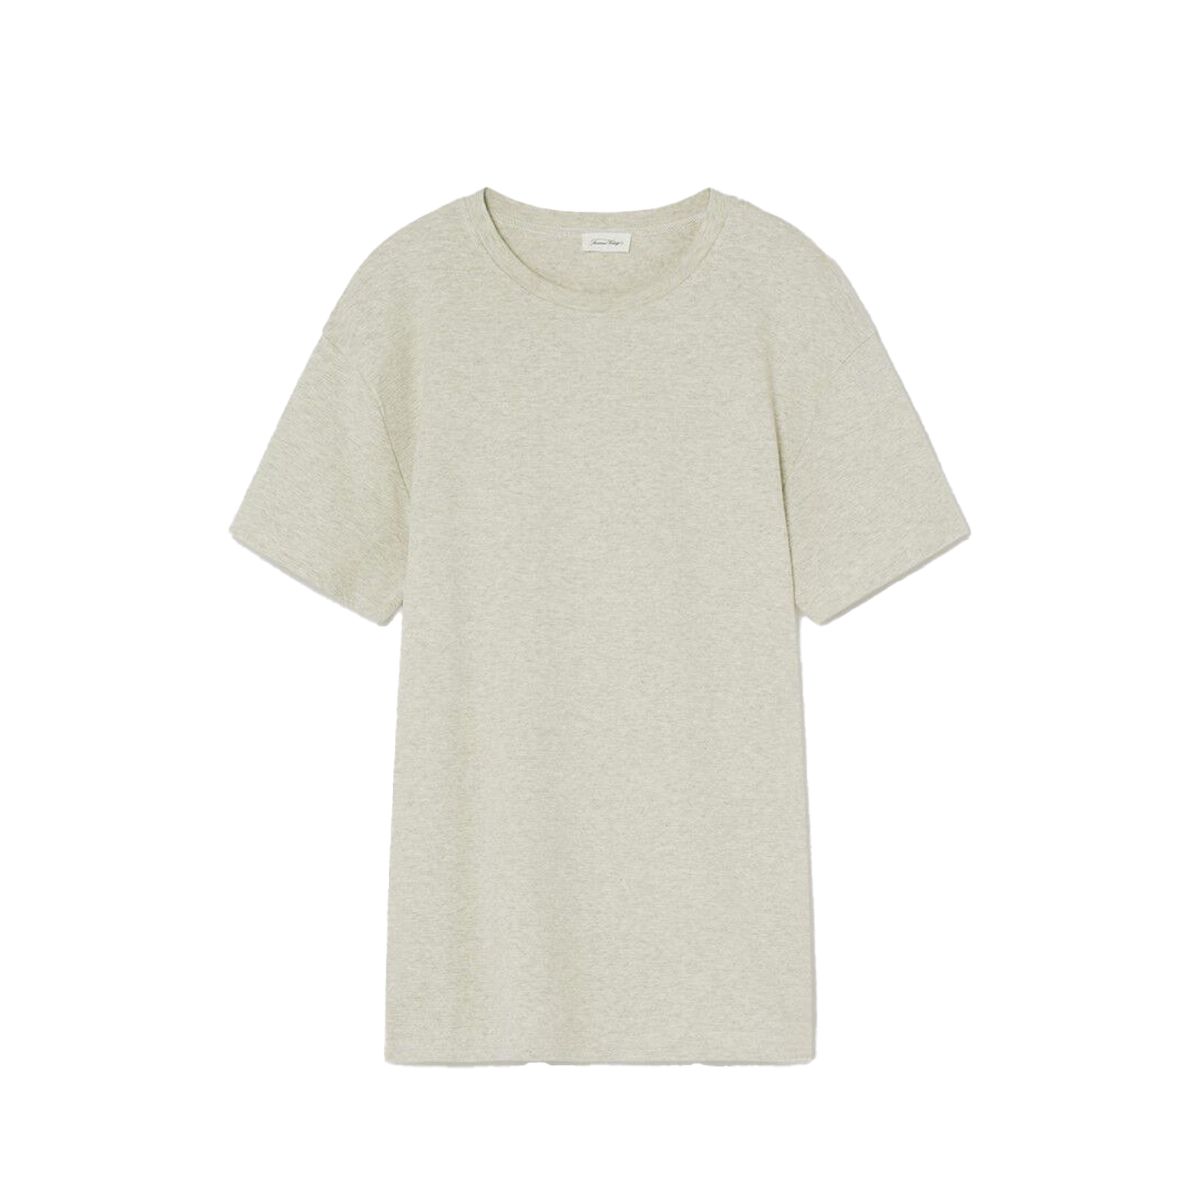 Ivoland Heather Grey T-Shirt